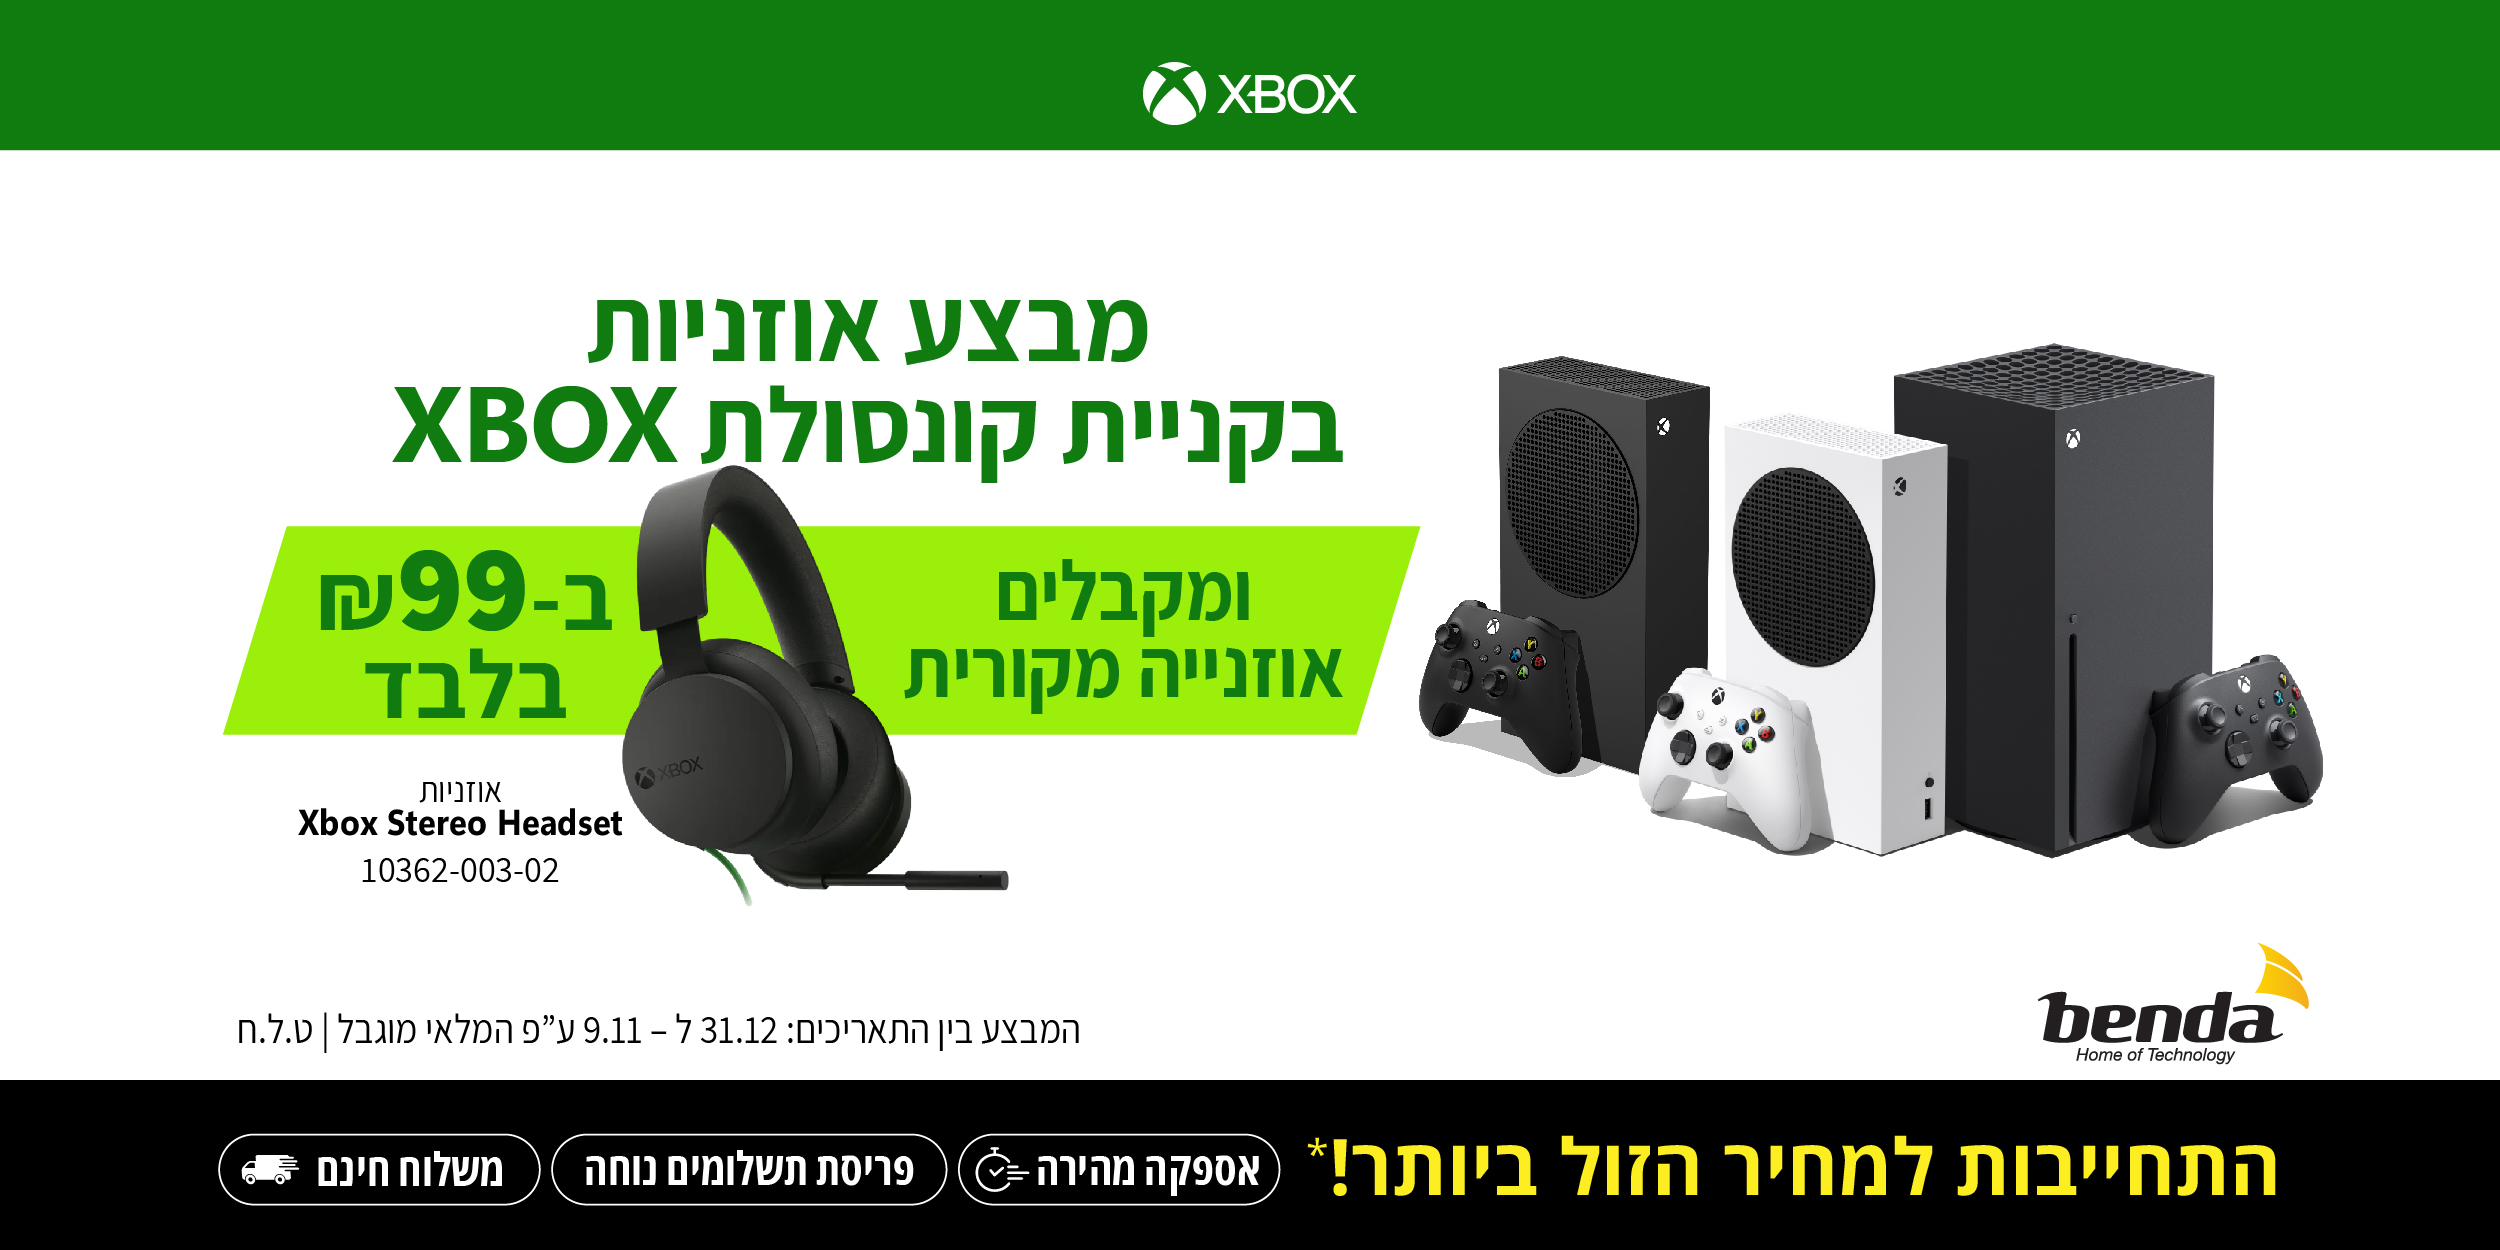 Xbox מבצע אוזניות בקניית קונסולת אקסבוקס ומקבלים אוזנייה ממקורית ב-99 ש